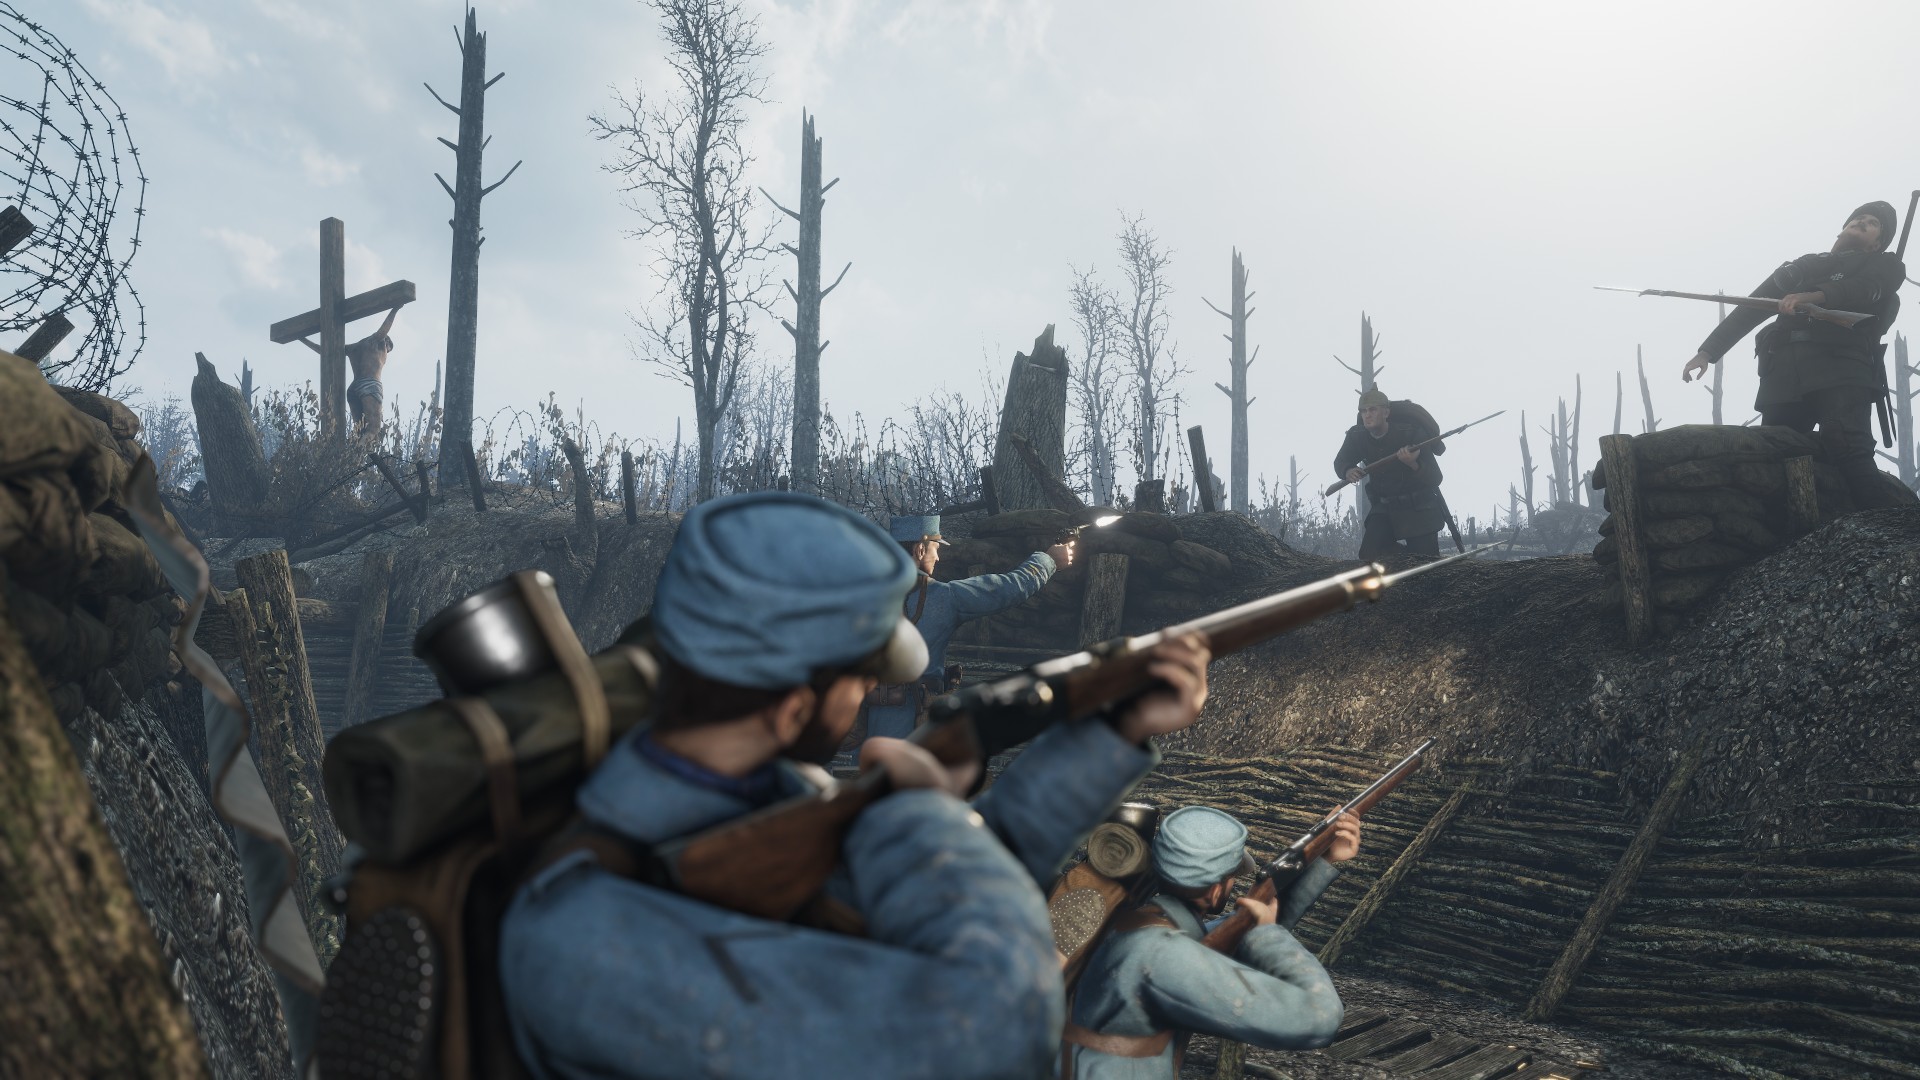 Battle of Verdun Counter-Strike: Global Offensive Xbox One First